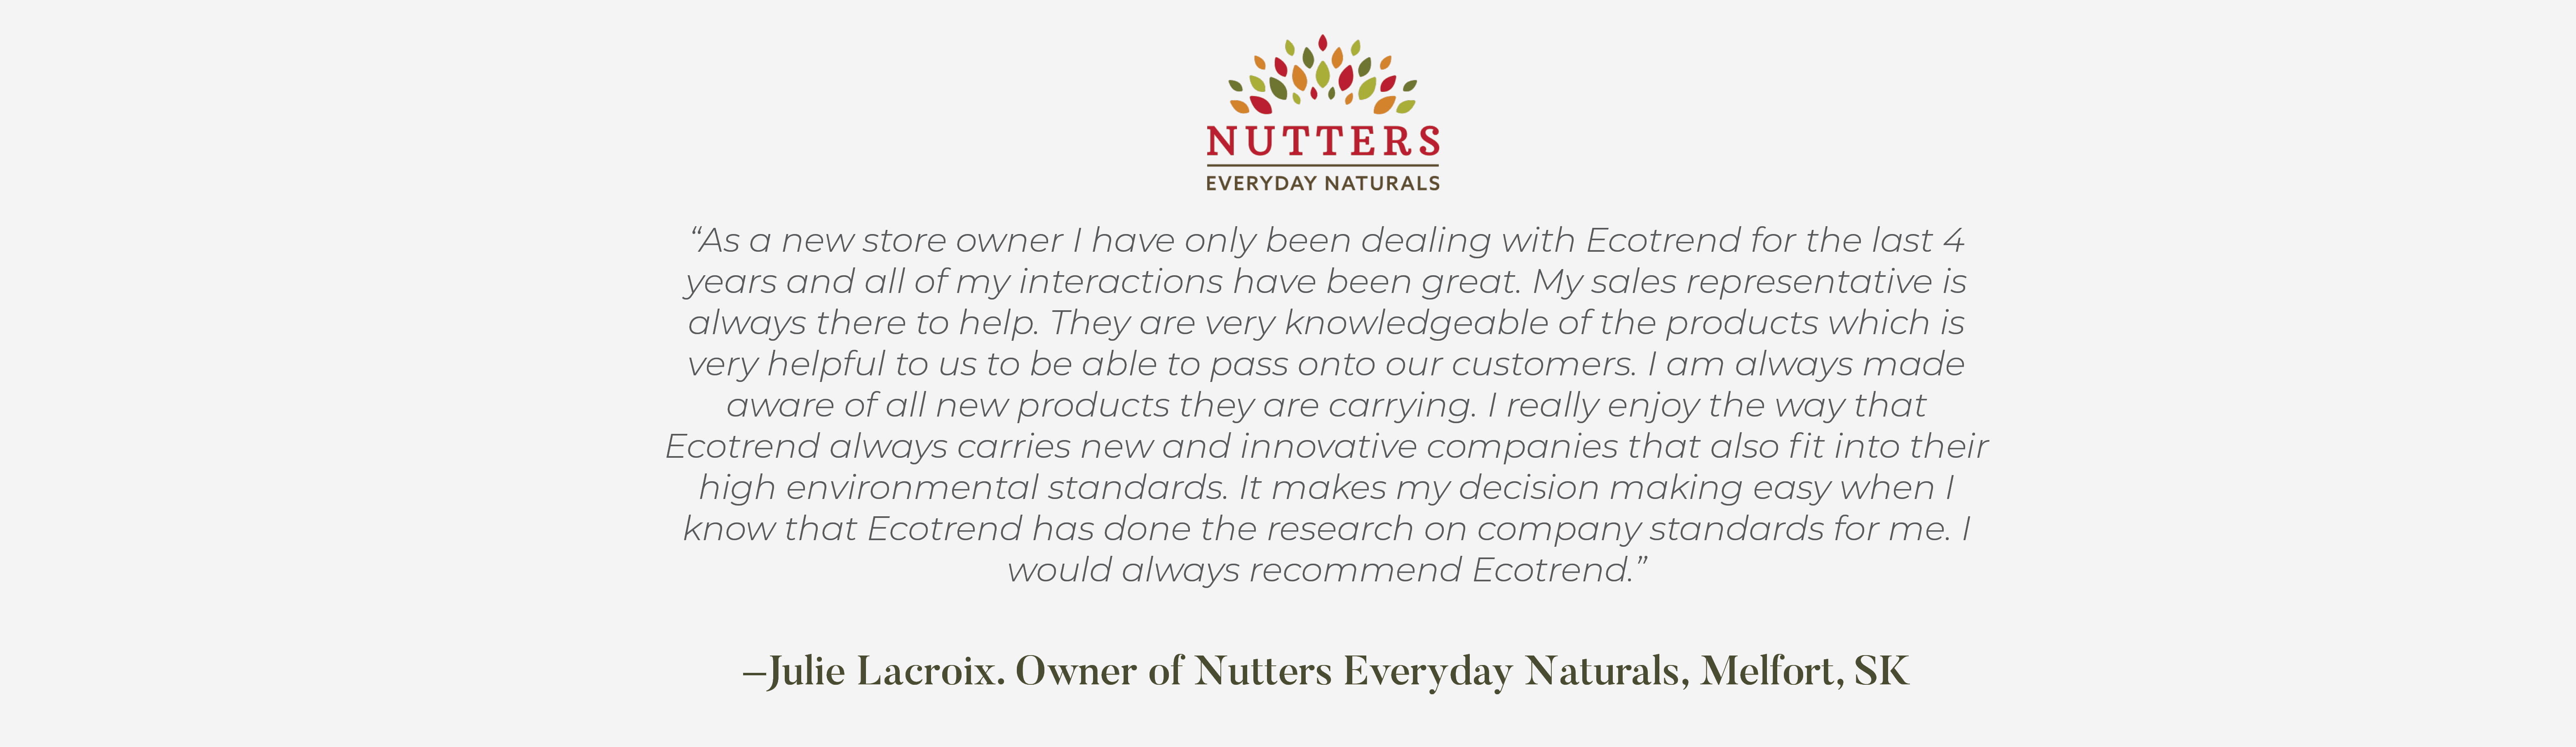 Julie Lacroix. Owner of Nutters Everyday Naturals Melfort SK testimonial